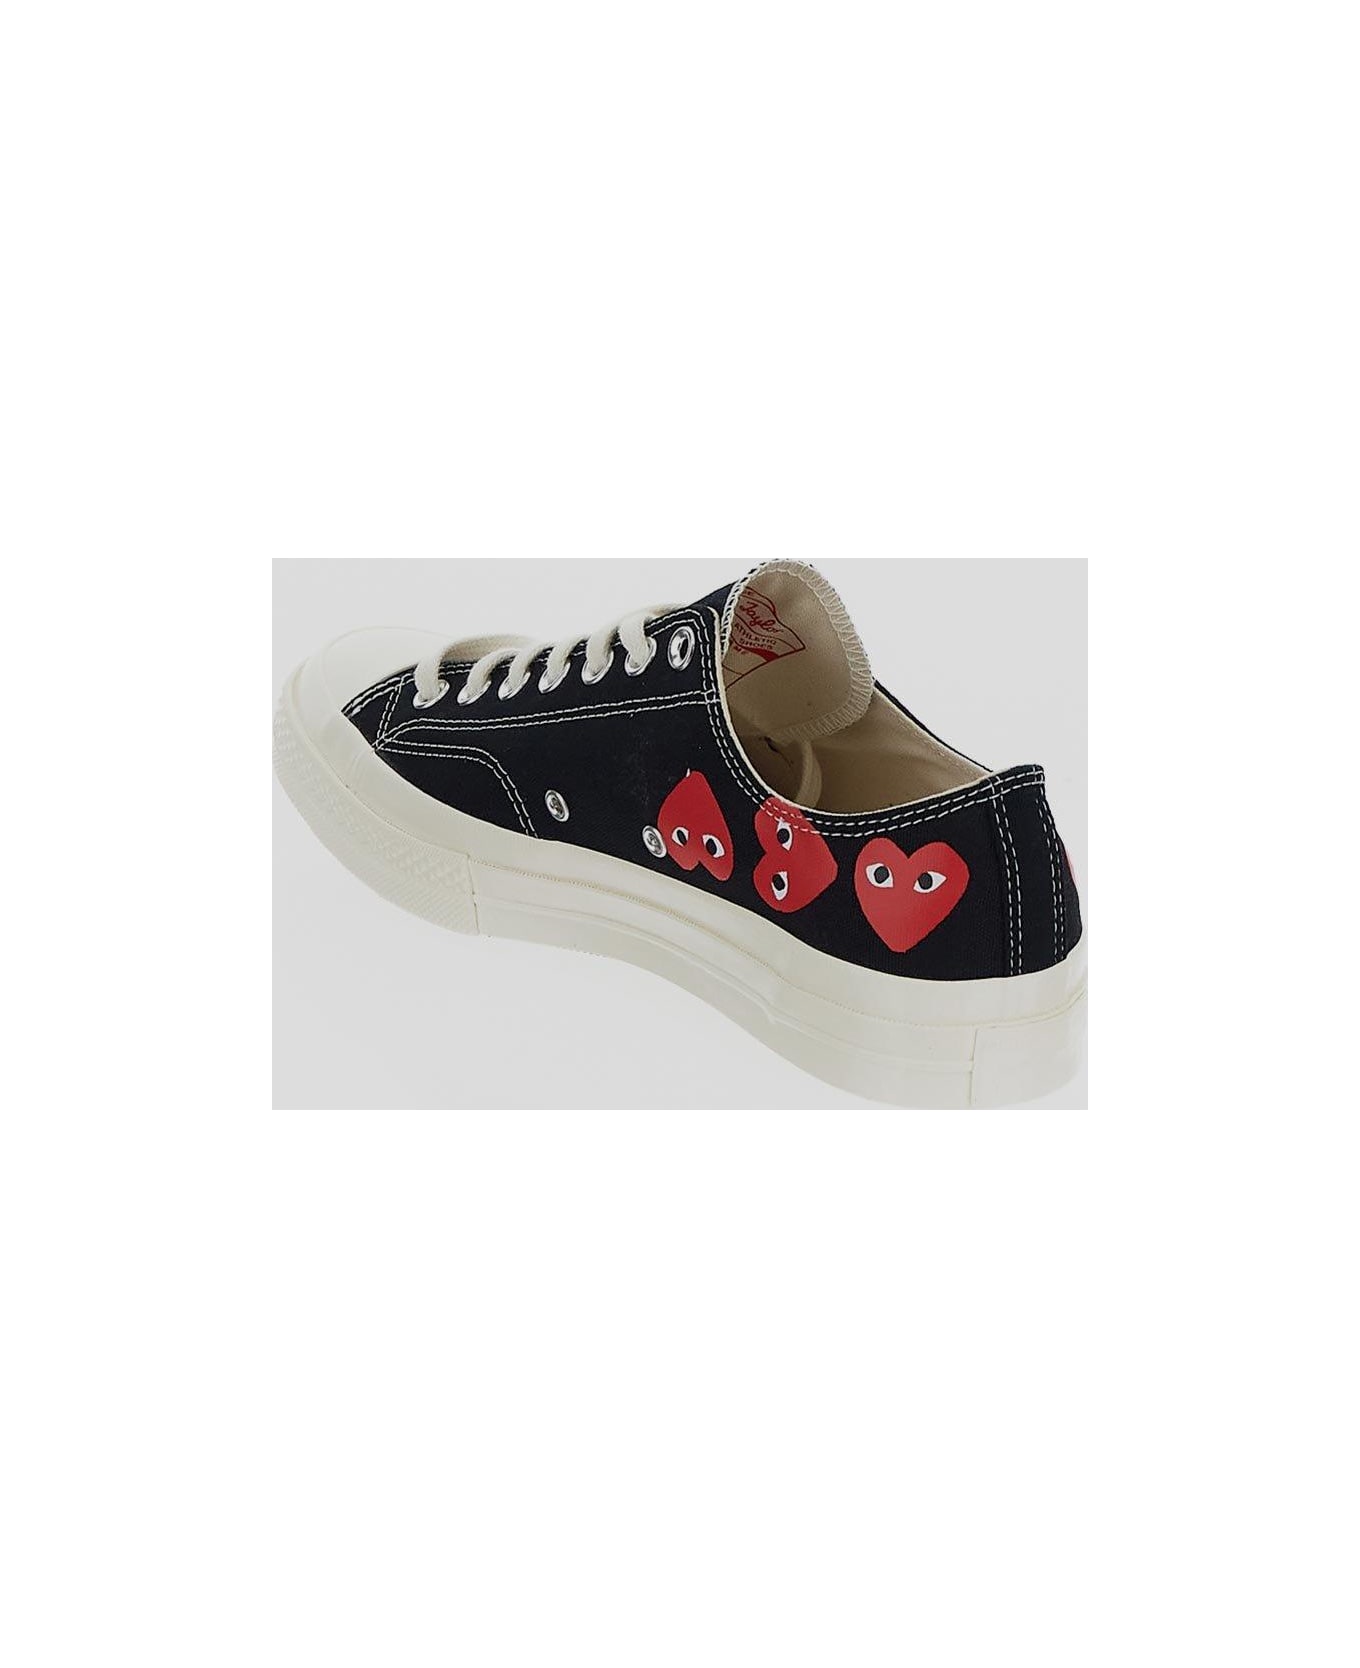 Comme des Garçons X Converse Chuck 70 Heart Printed Lace-up Sneakers - Black スニーカー